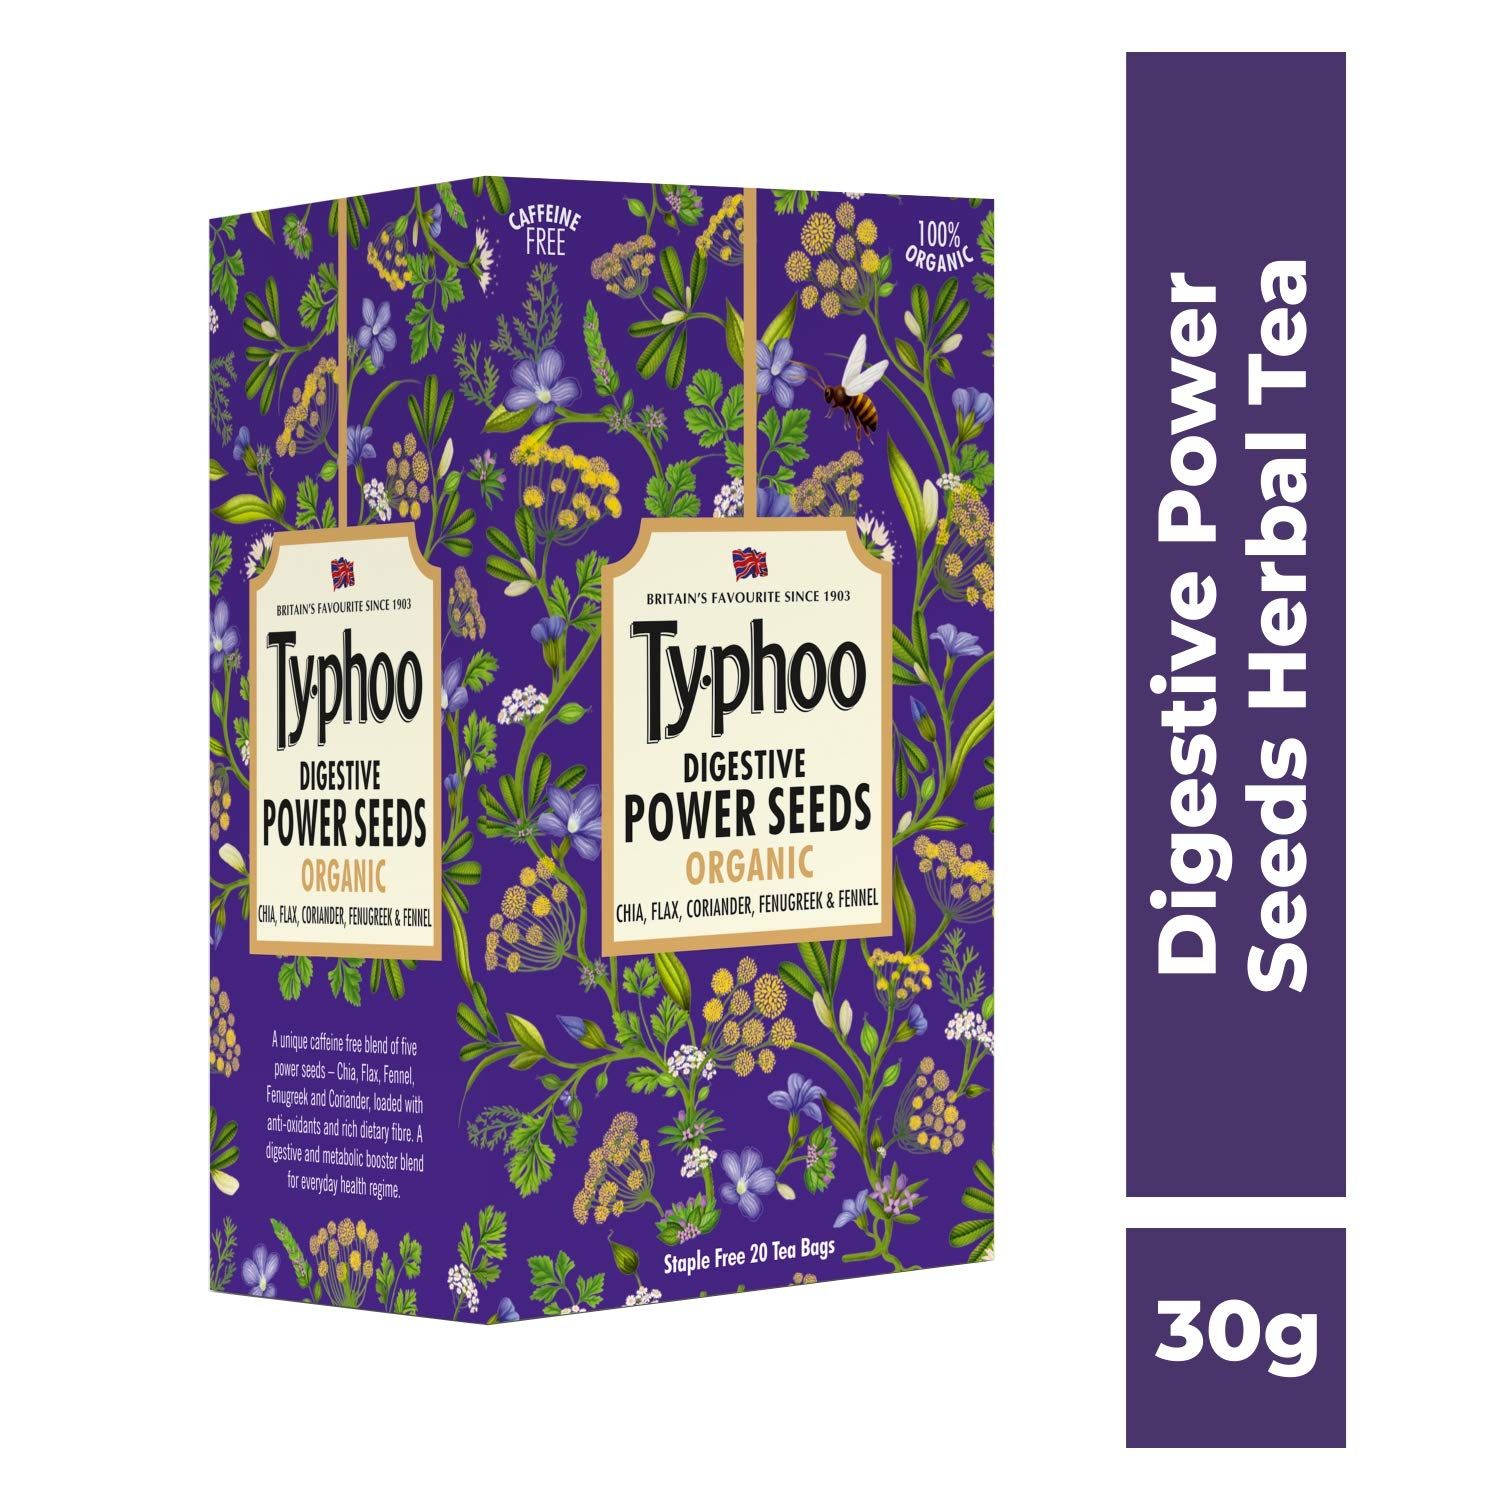 Typhoo Digestive Organic Power Seeds Pouch Image